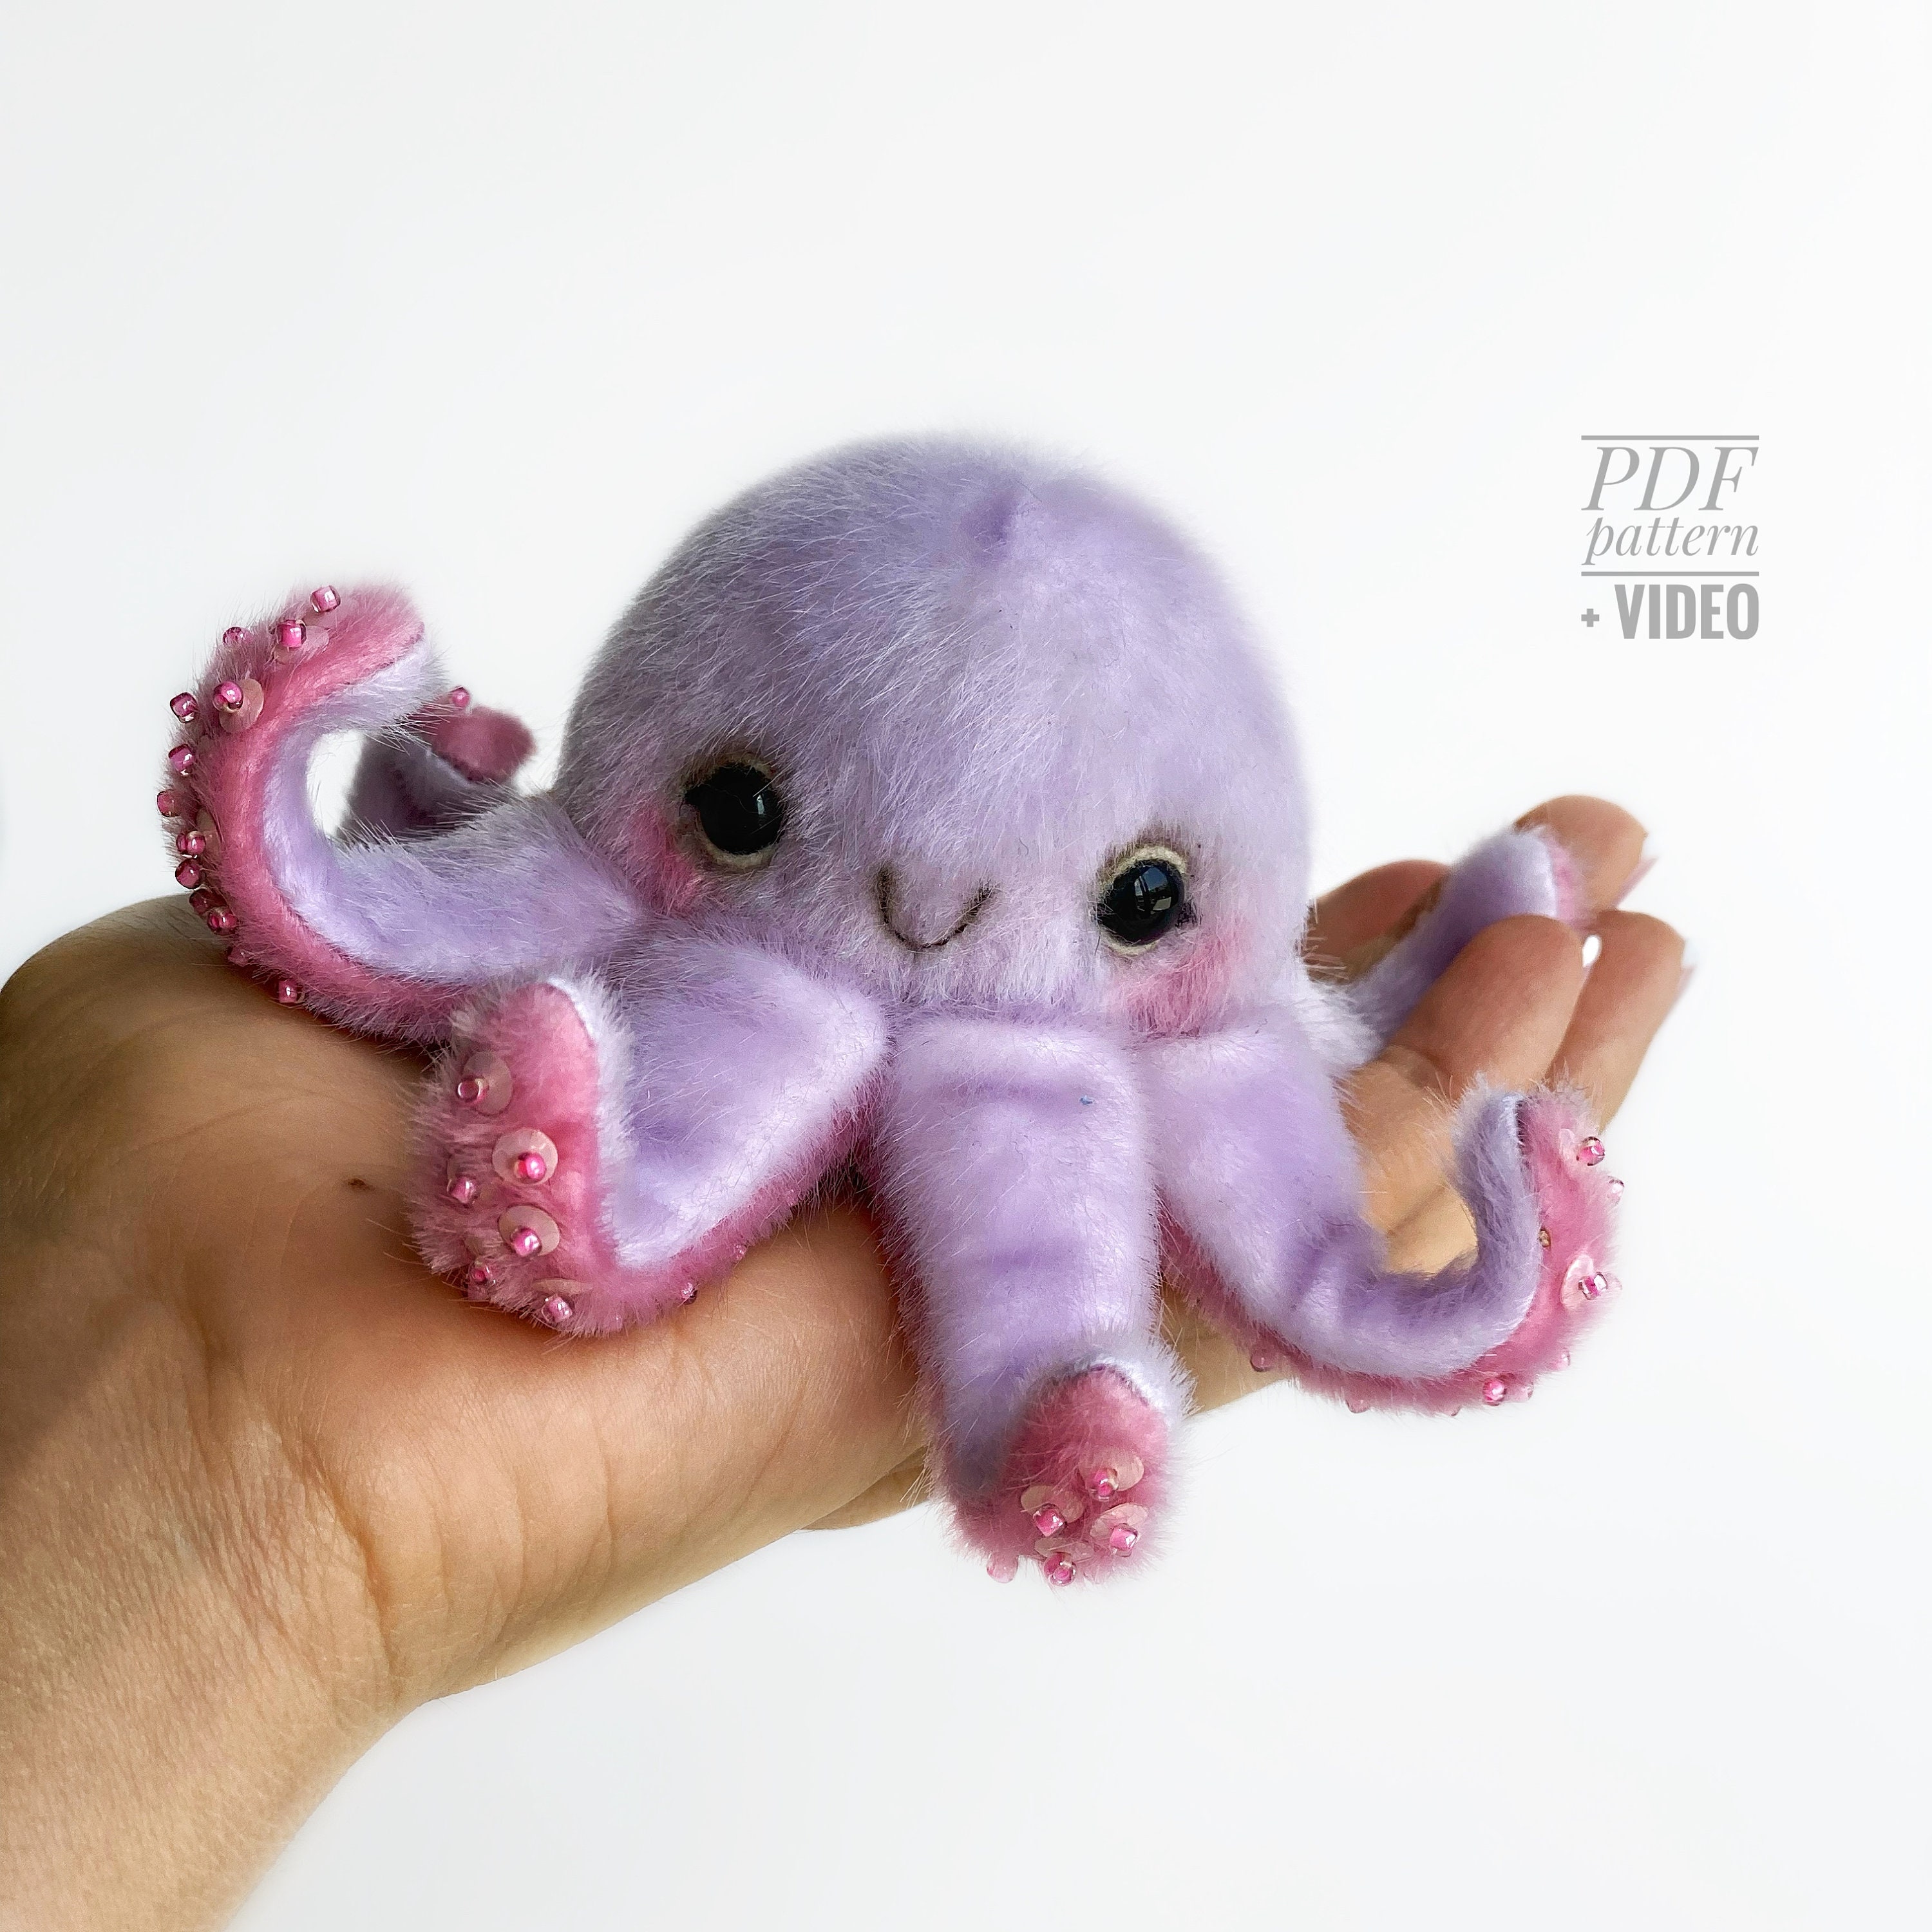 Octocute plushie  Sewing stuffed animals, Plushies, Diy baby stuff